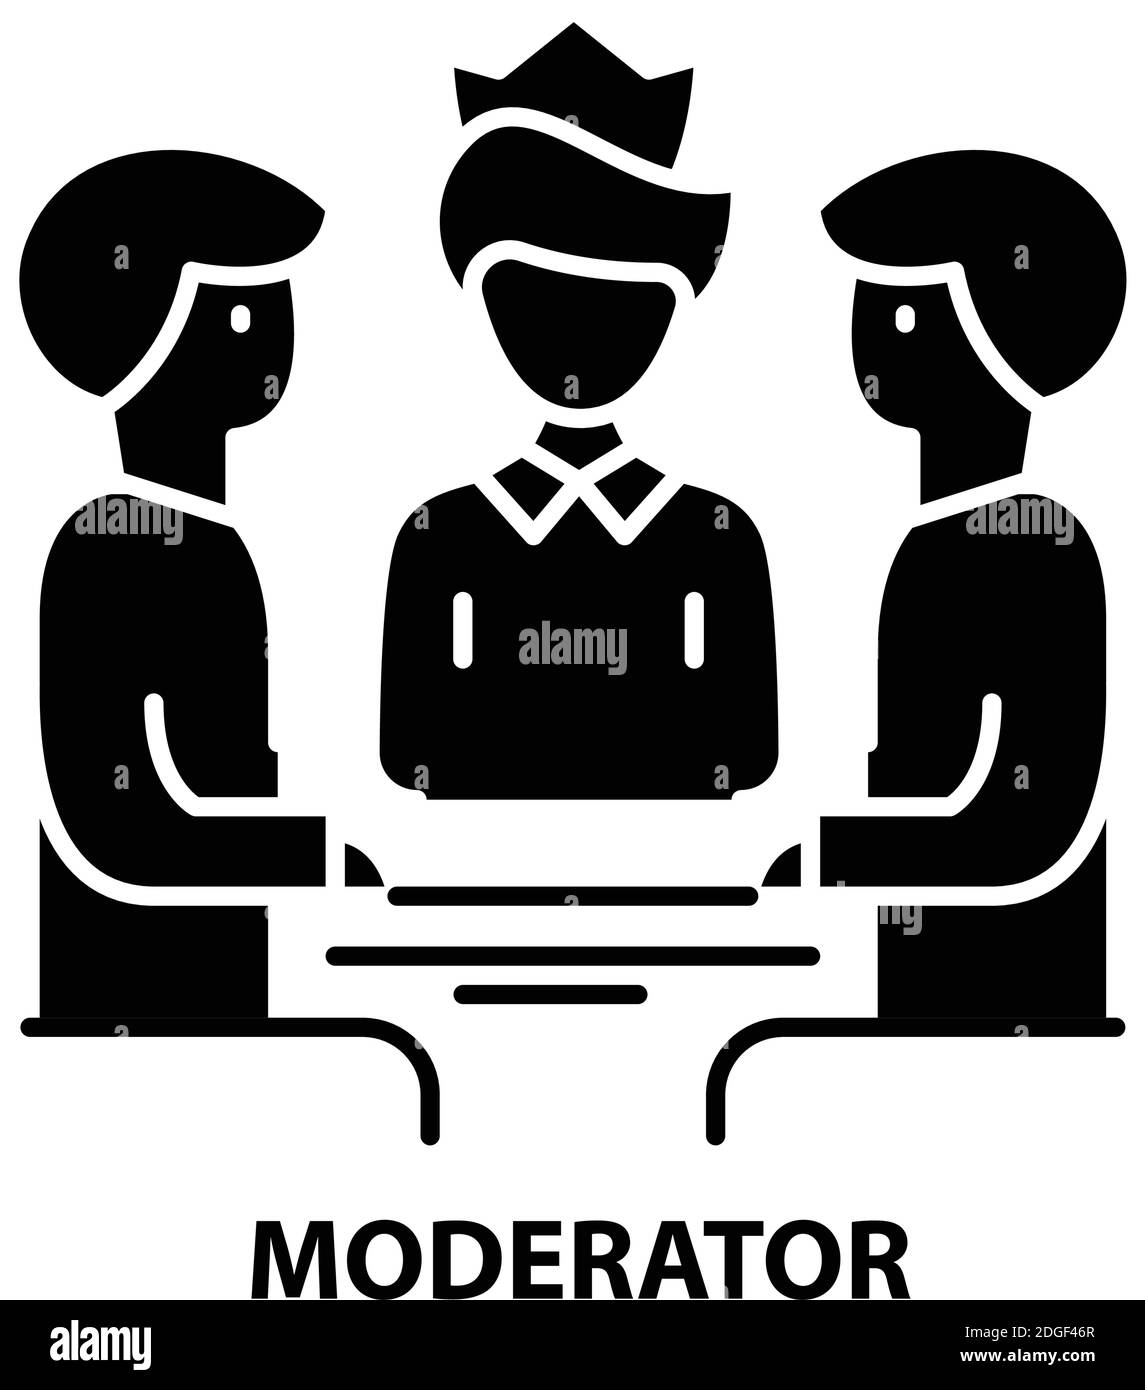 moderator icon, black vector sign with editable strokes, concept illustration Stock Vector